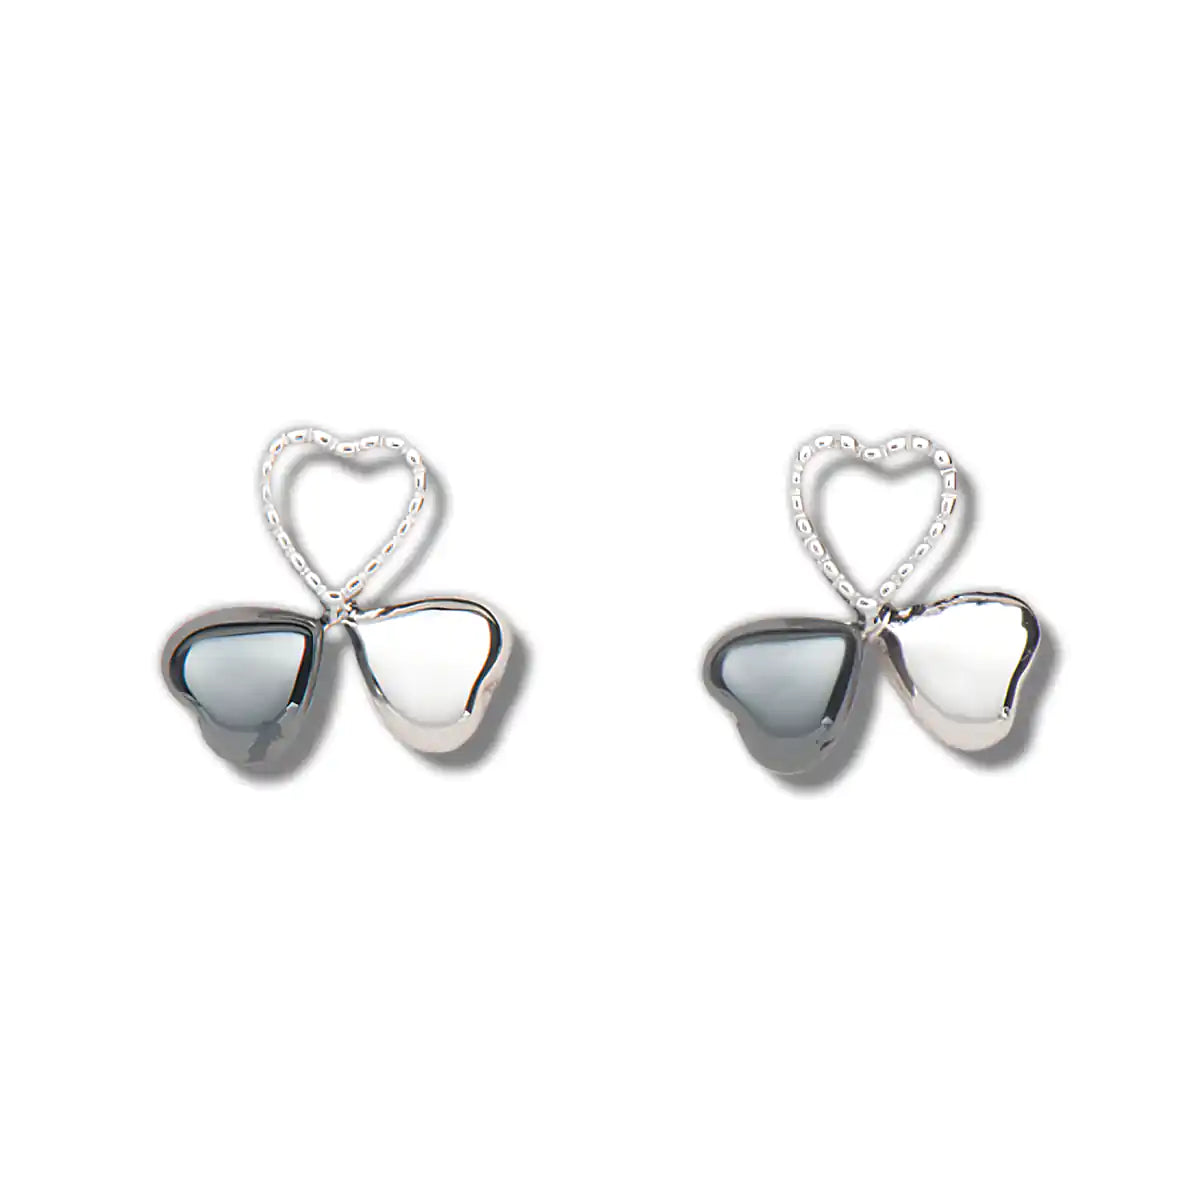 Hematite love's reflection earrings